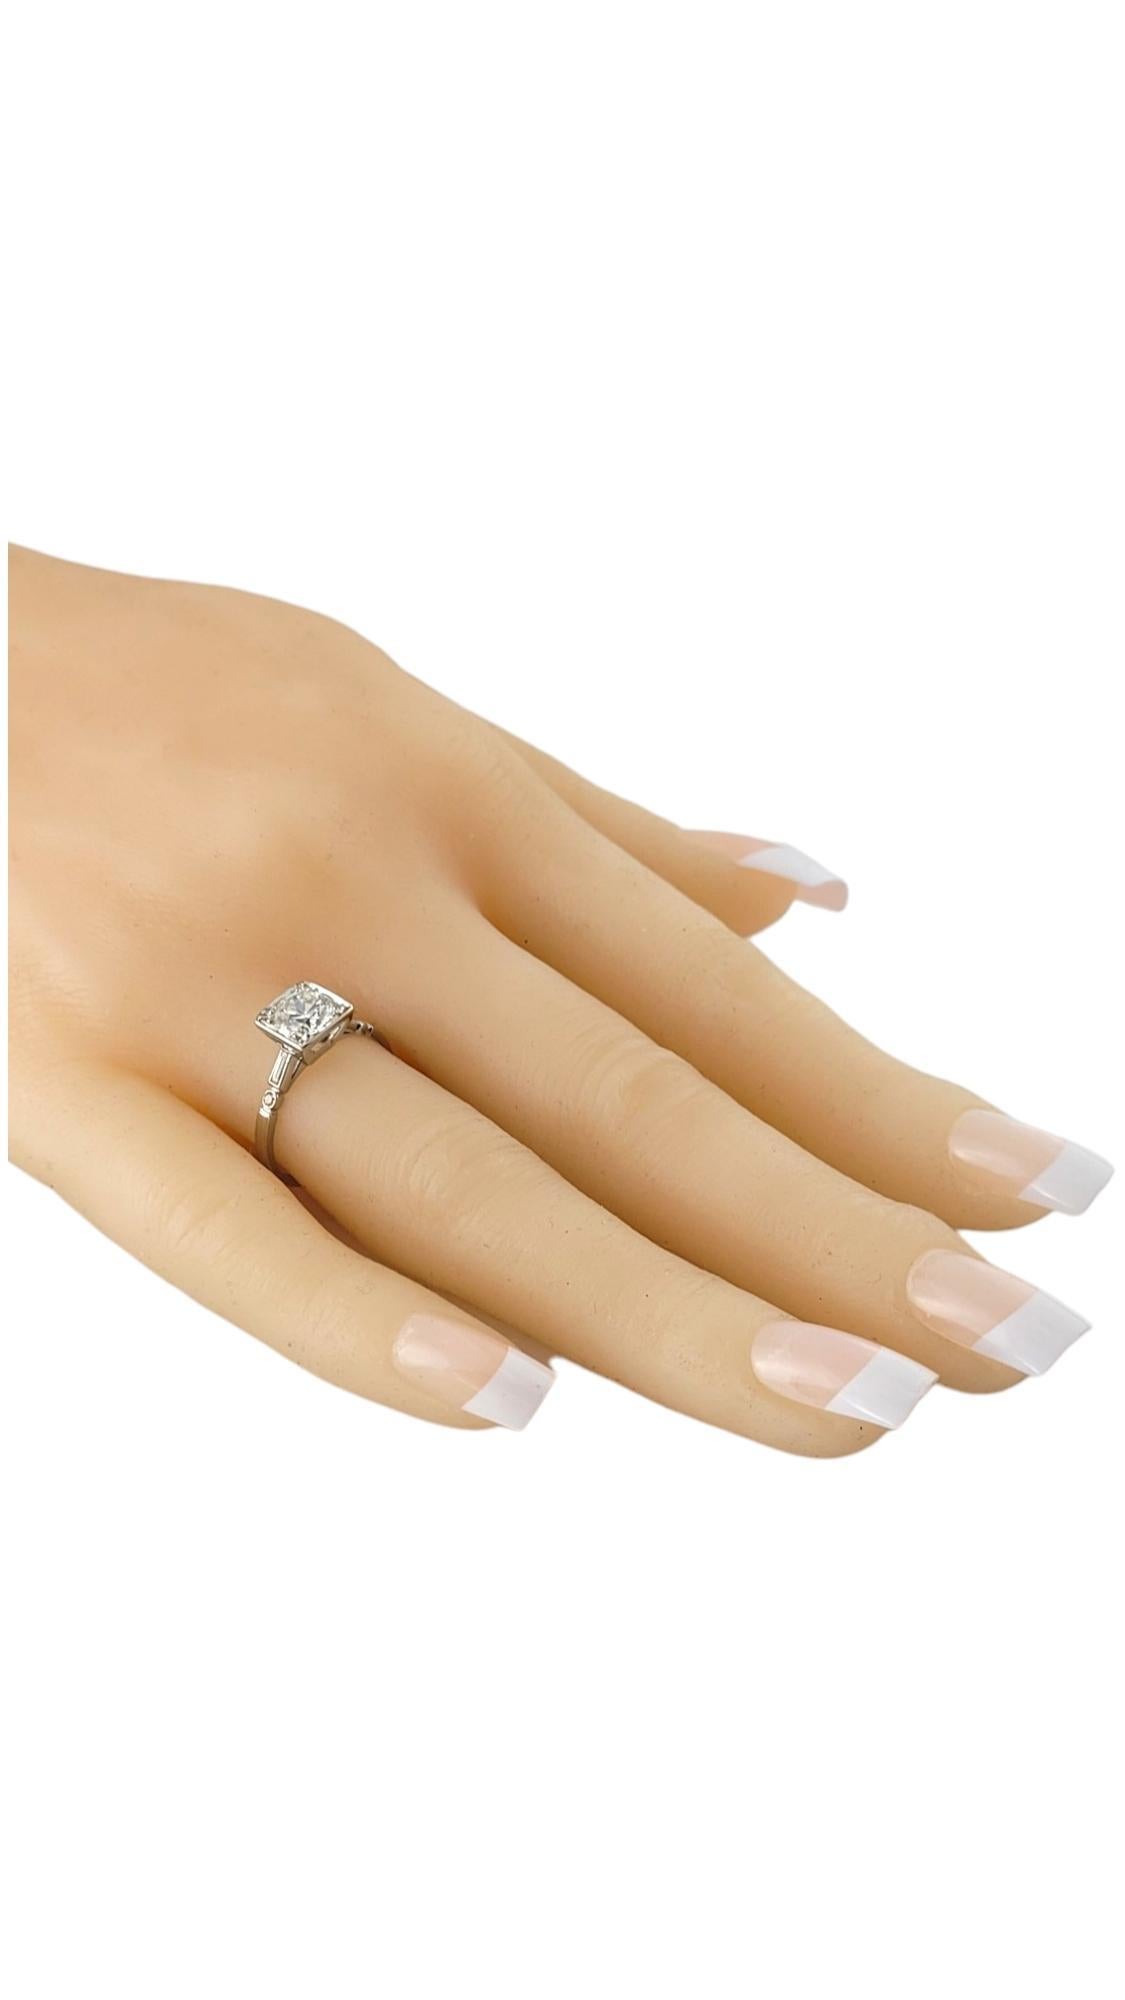 Vintage Platinum Old Cut Diamond Engagement Ring Size 6-6.25 #16929 For Sale 3